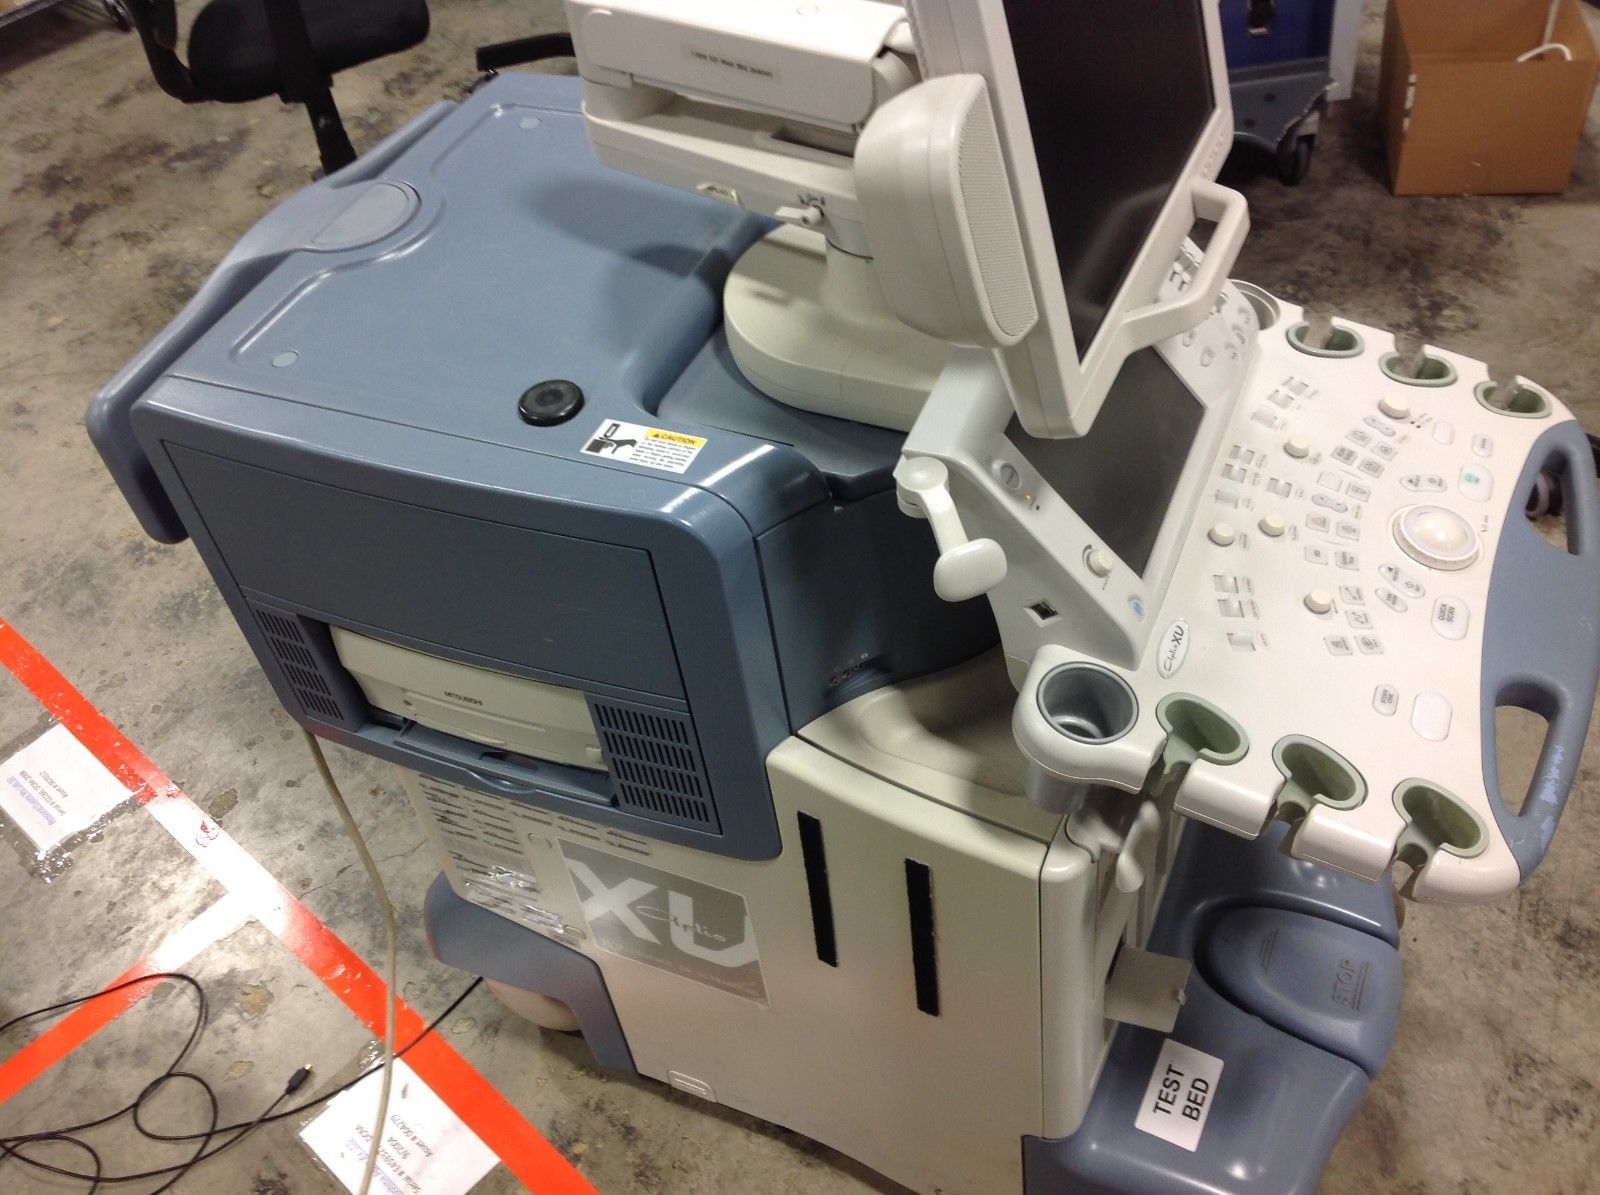 Toshiba Aplio XV LCD Ultrasound System DIAGNOSTIC ULTRASOUND MACHINES FOR SALE